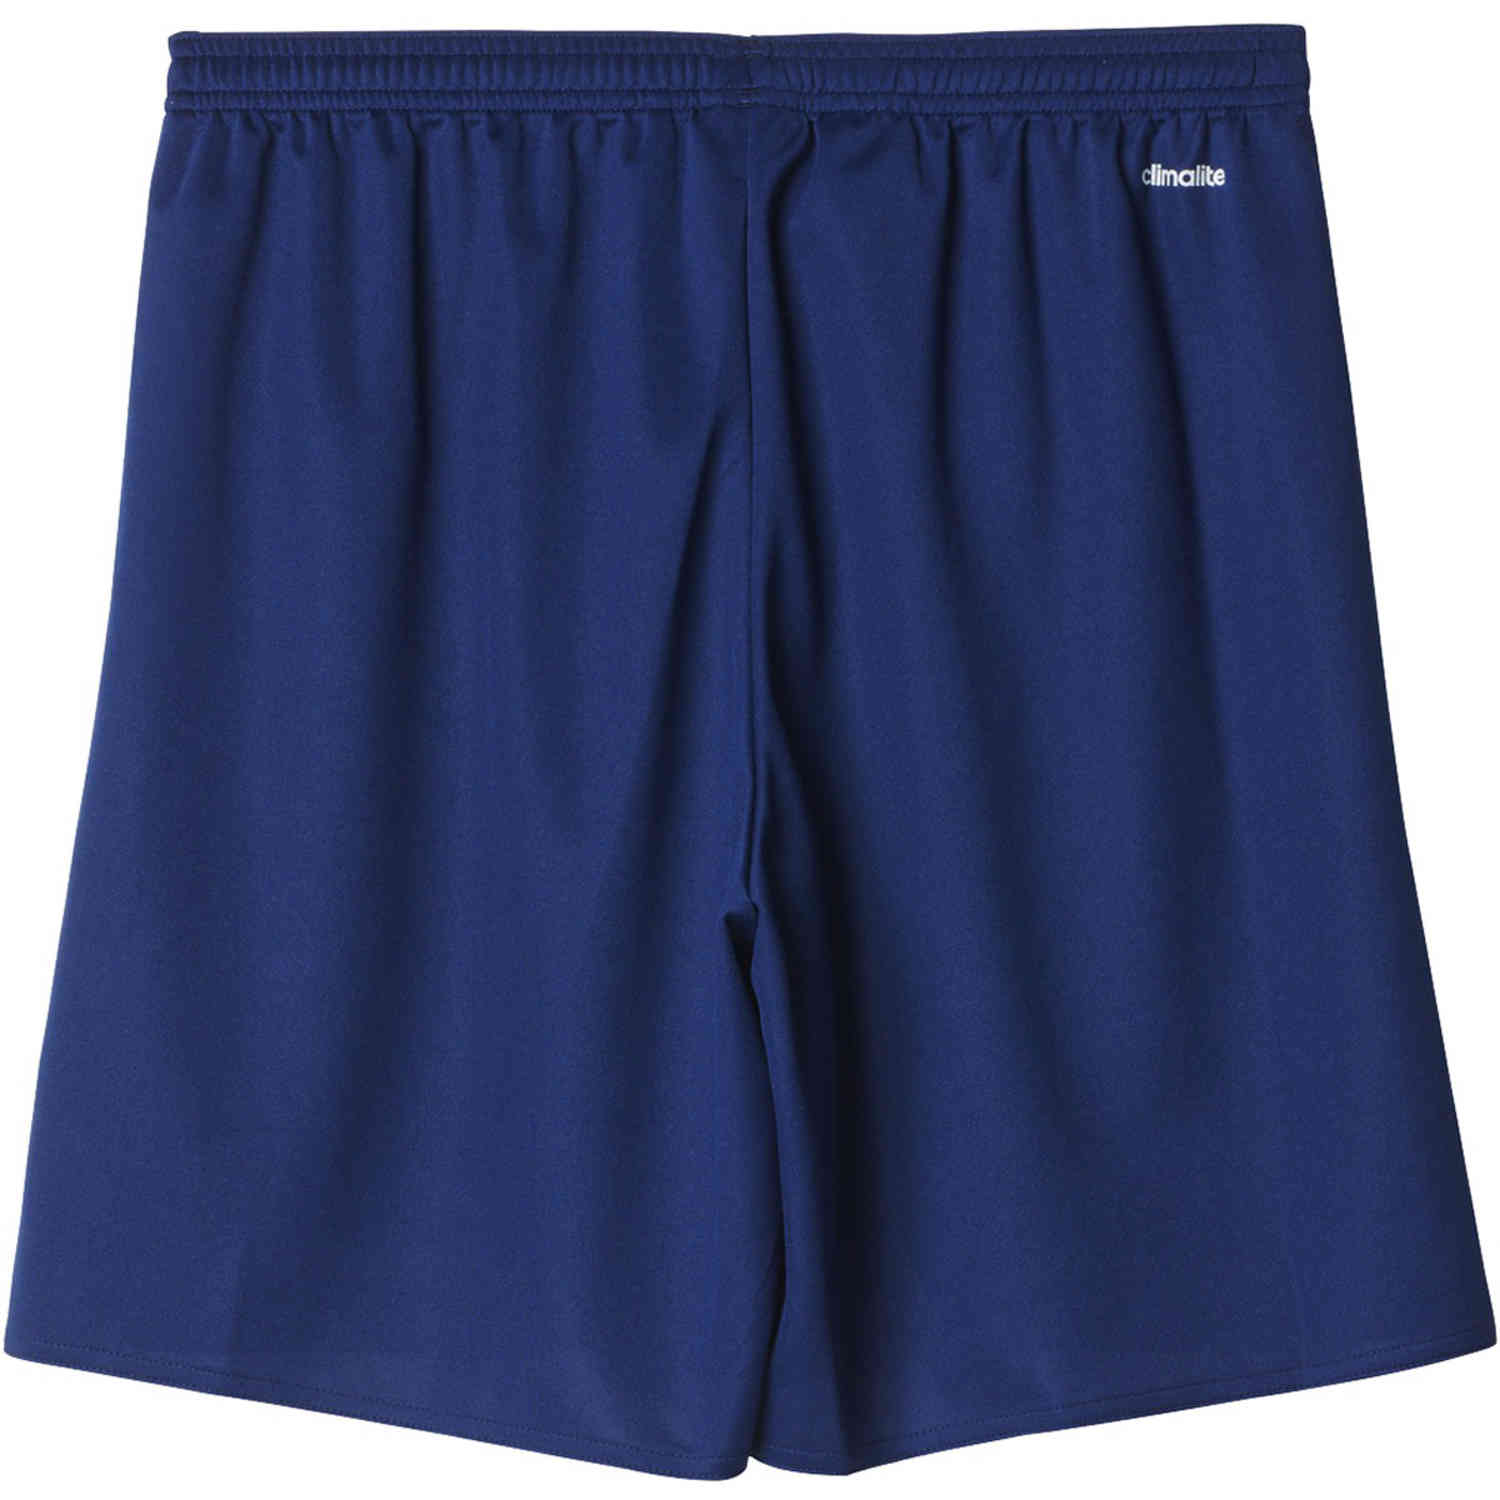 adidas Parma 16 Shorts - Dark Blue - SoccerPro